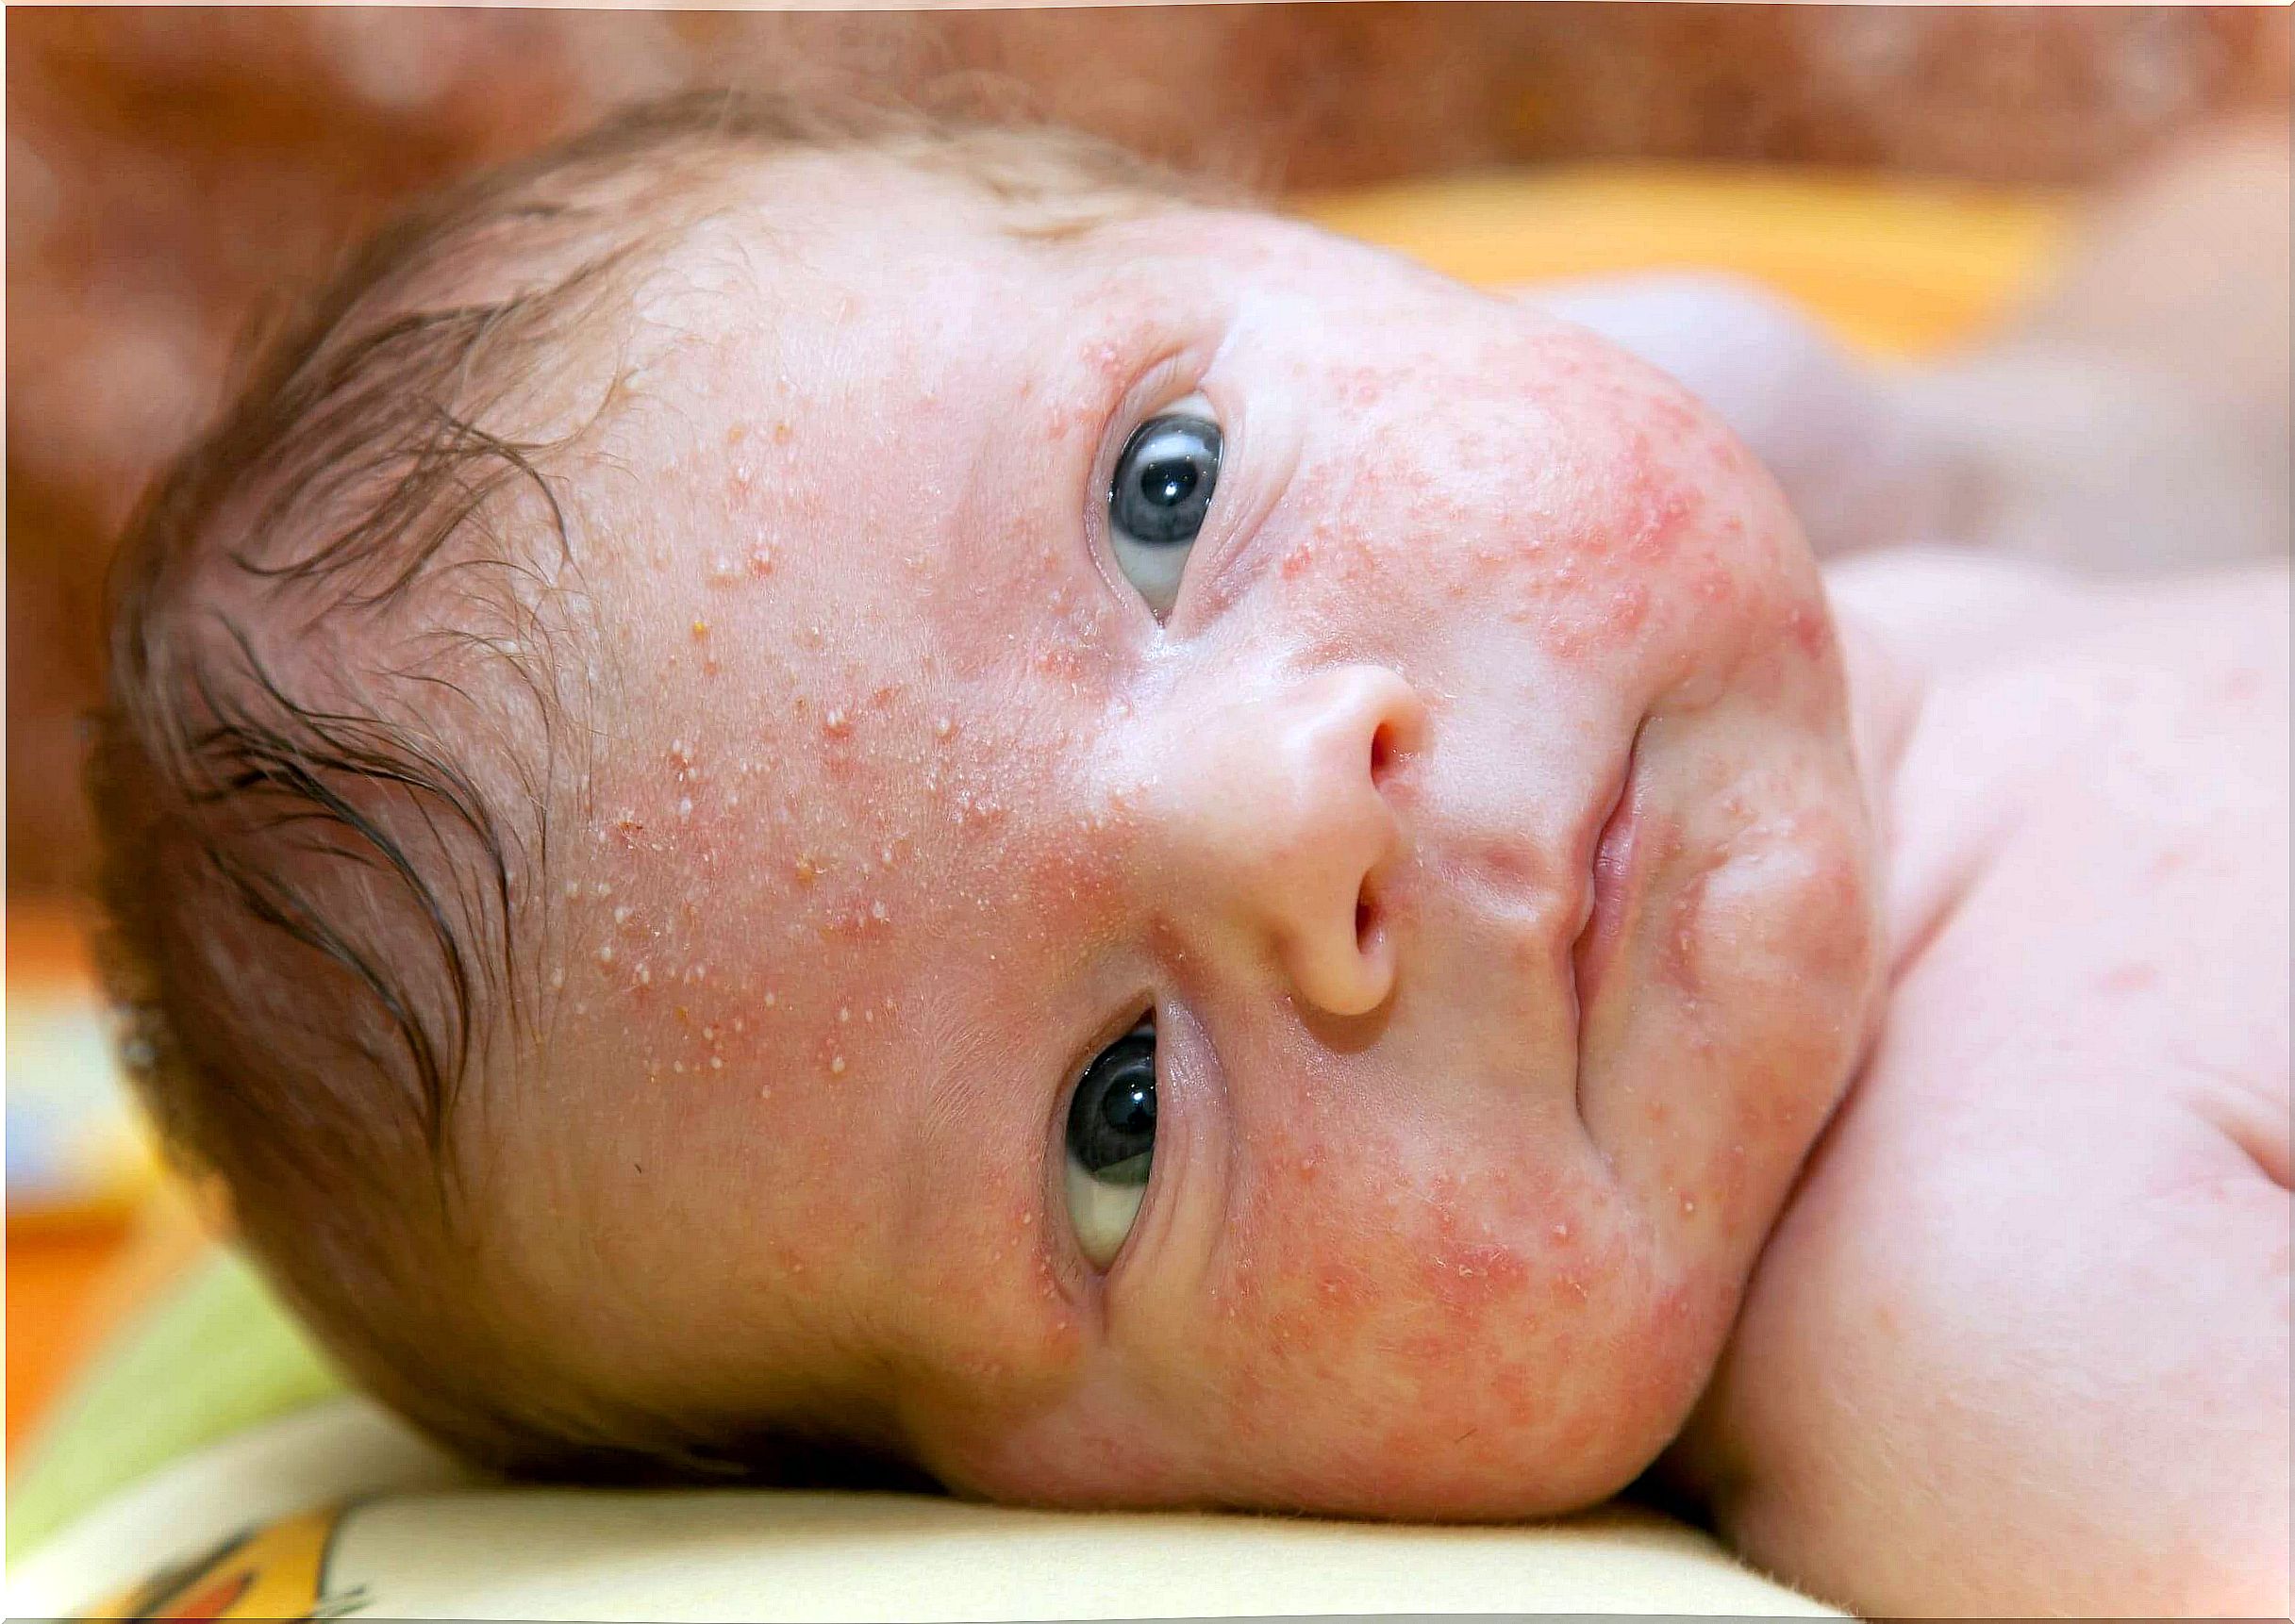 Neonatal acne treatment